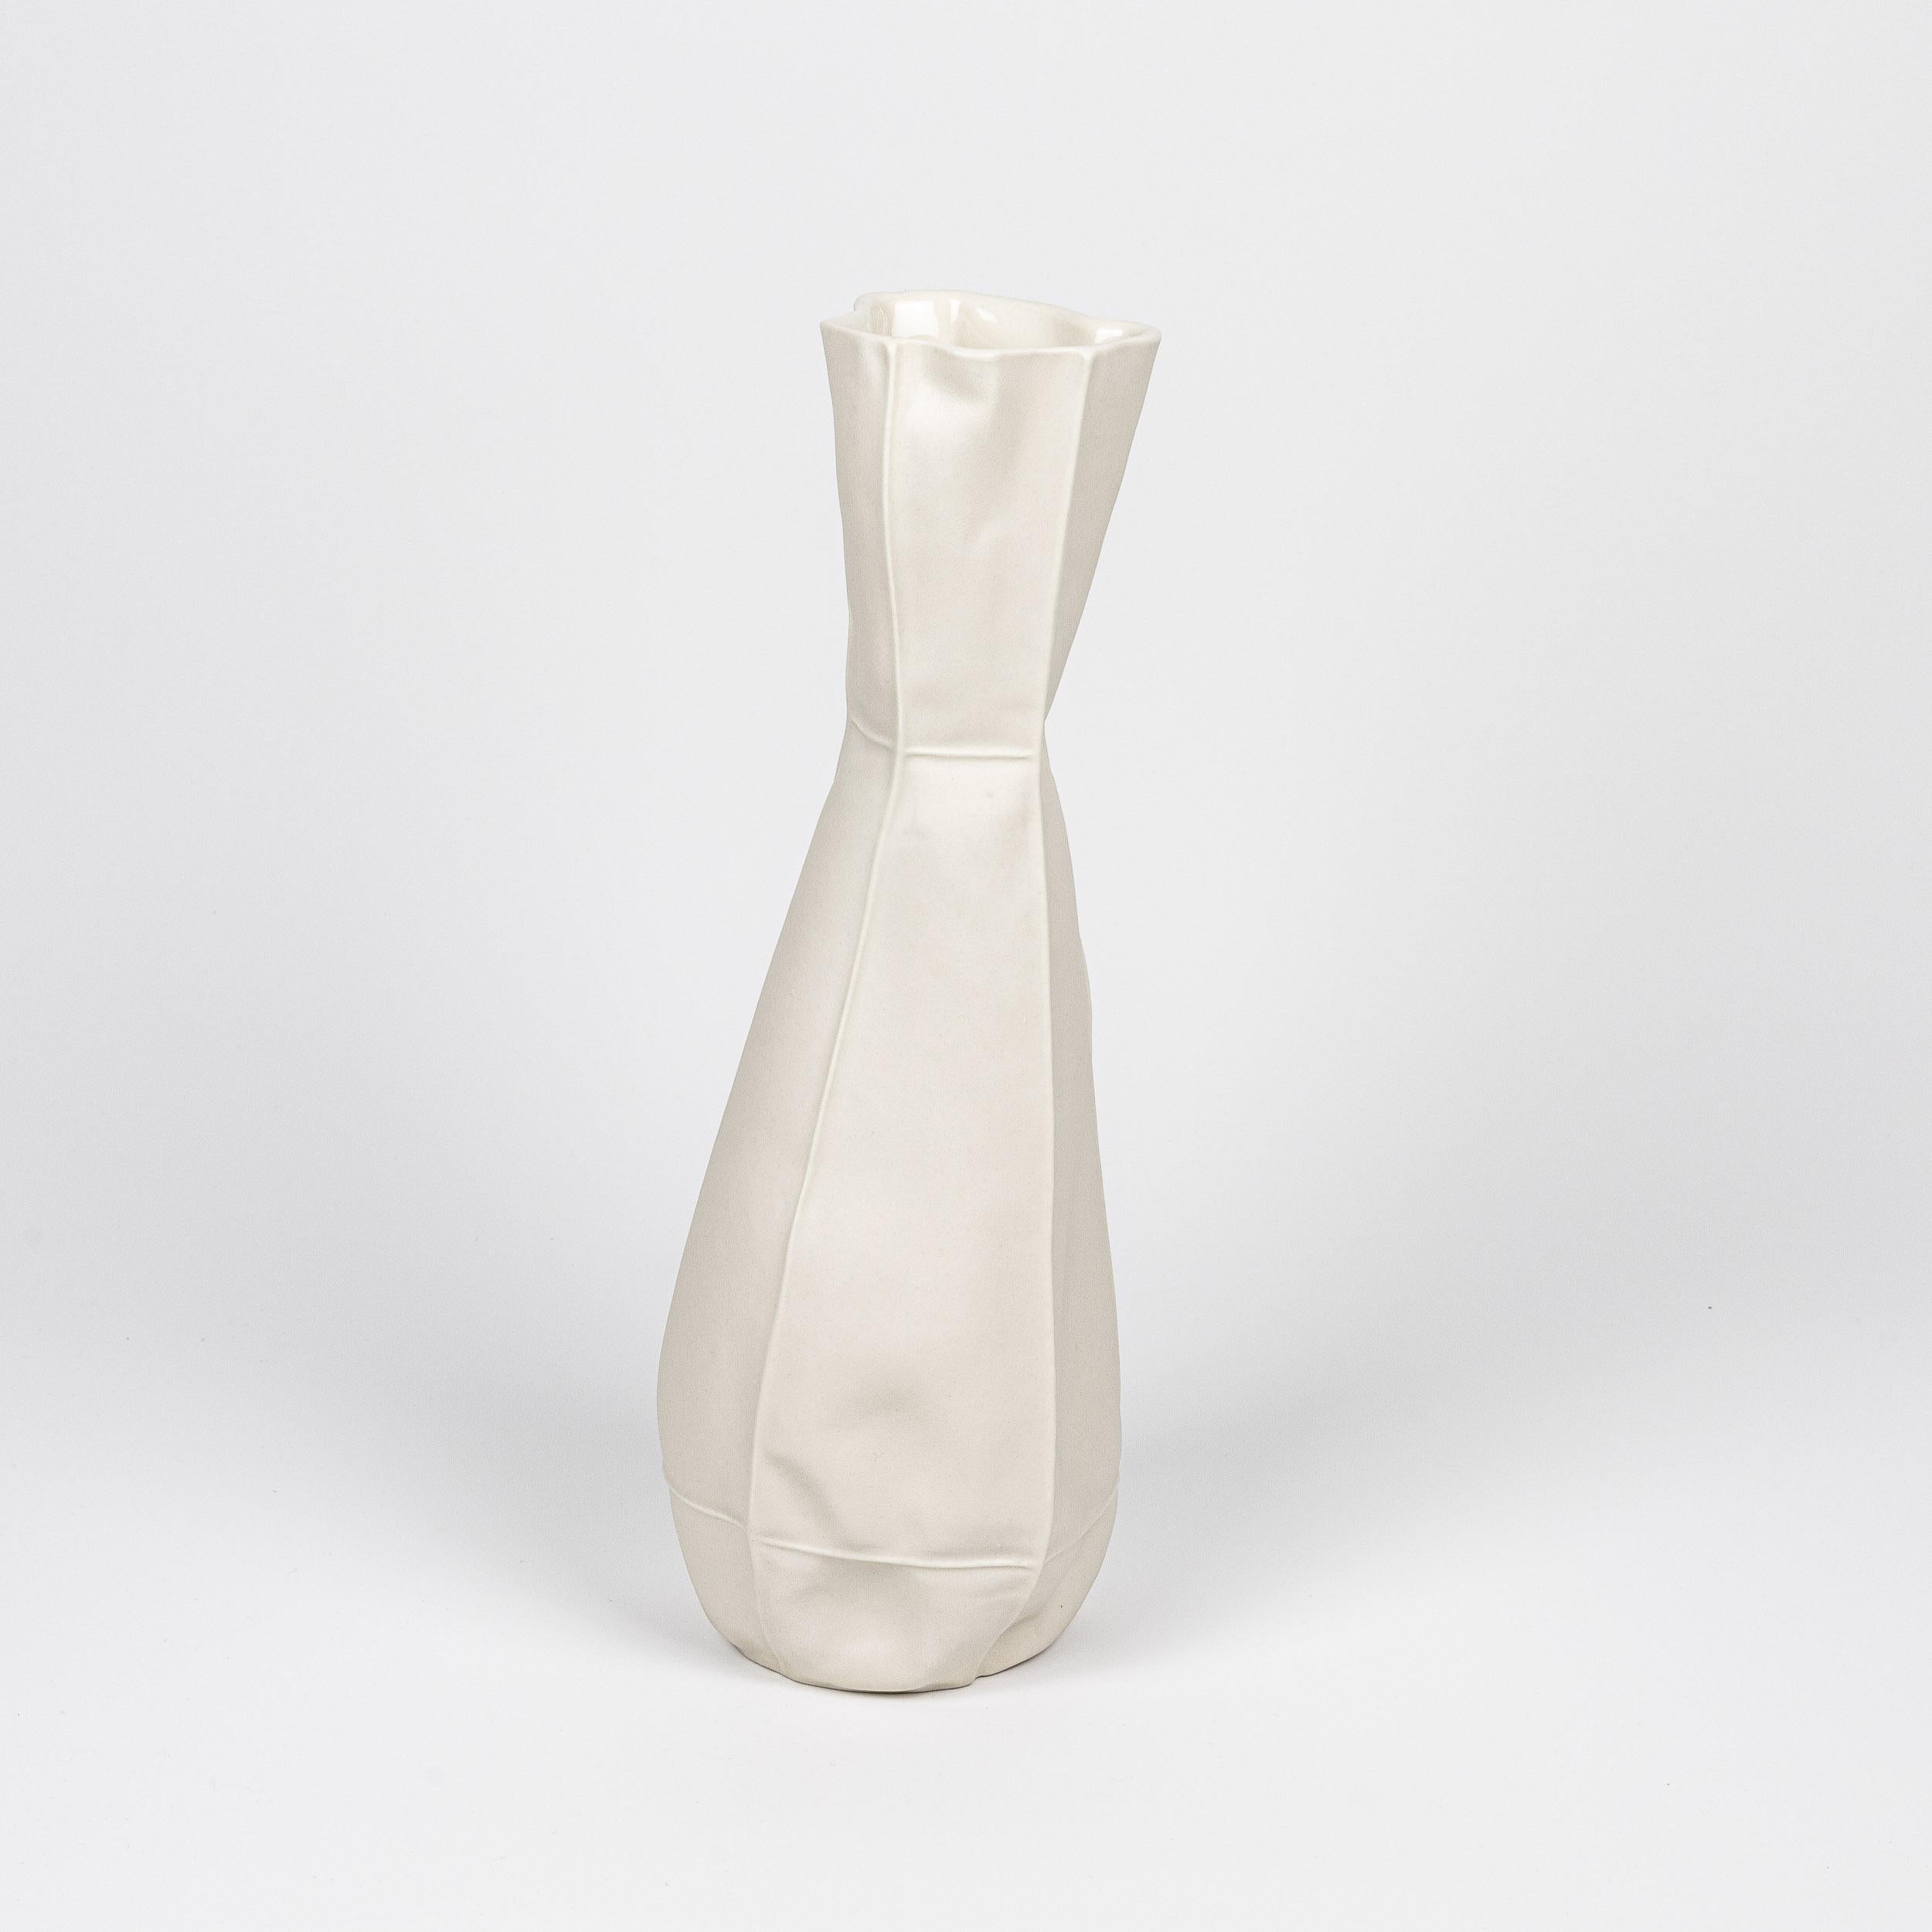 Hand-Crafted White Ceramic Kawa Vase #13, Organic Porcelain Flower Vase, Leather-cast For Sale